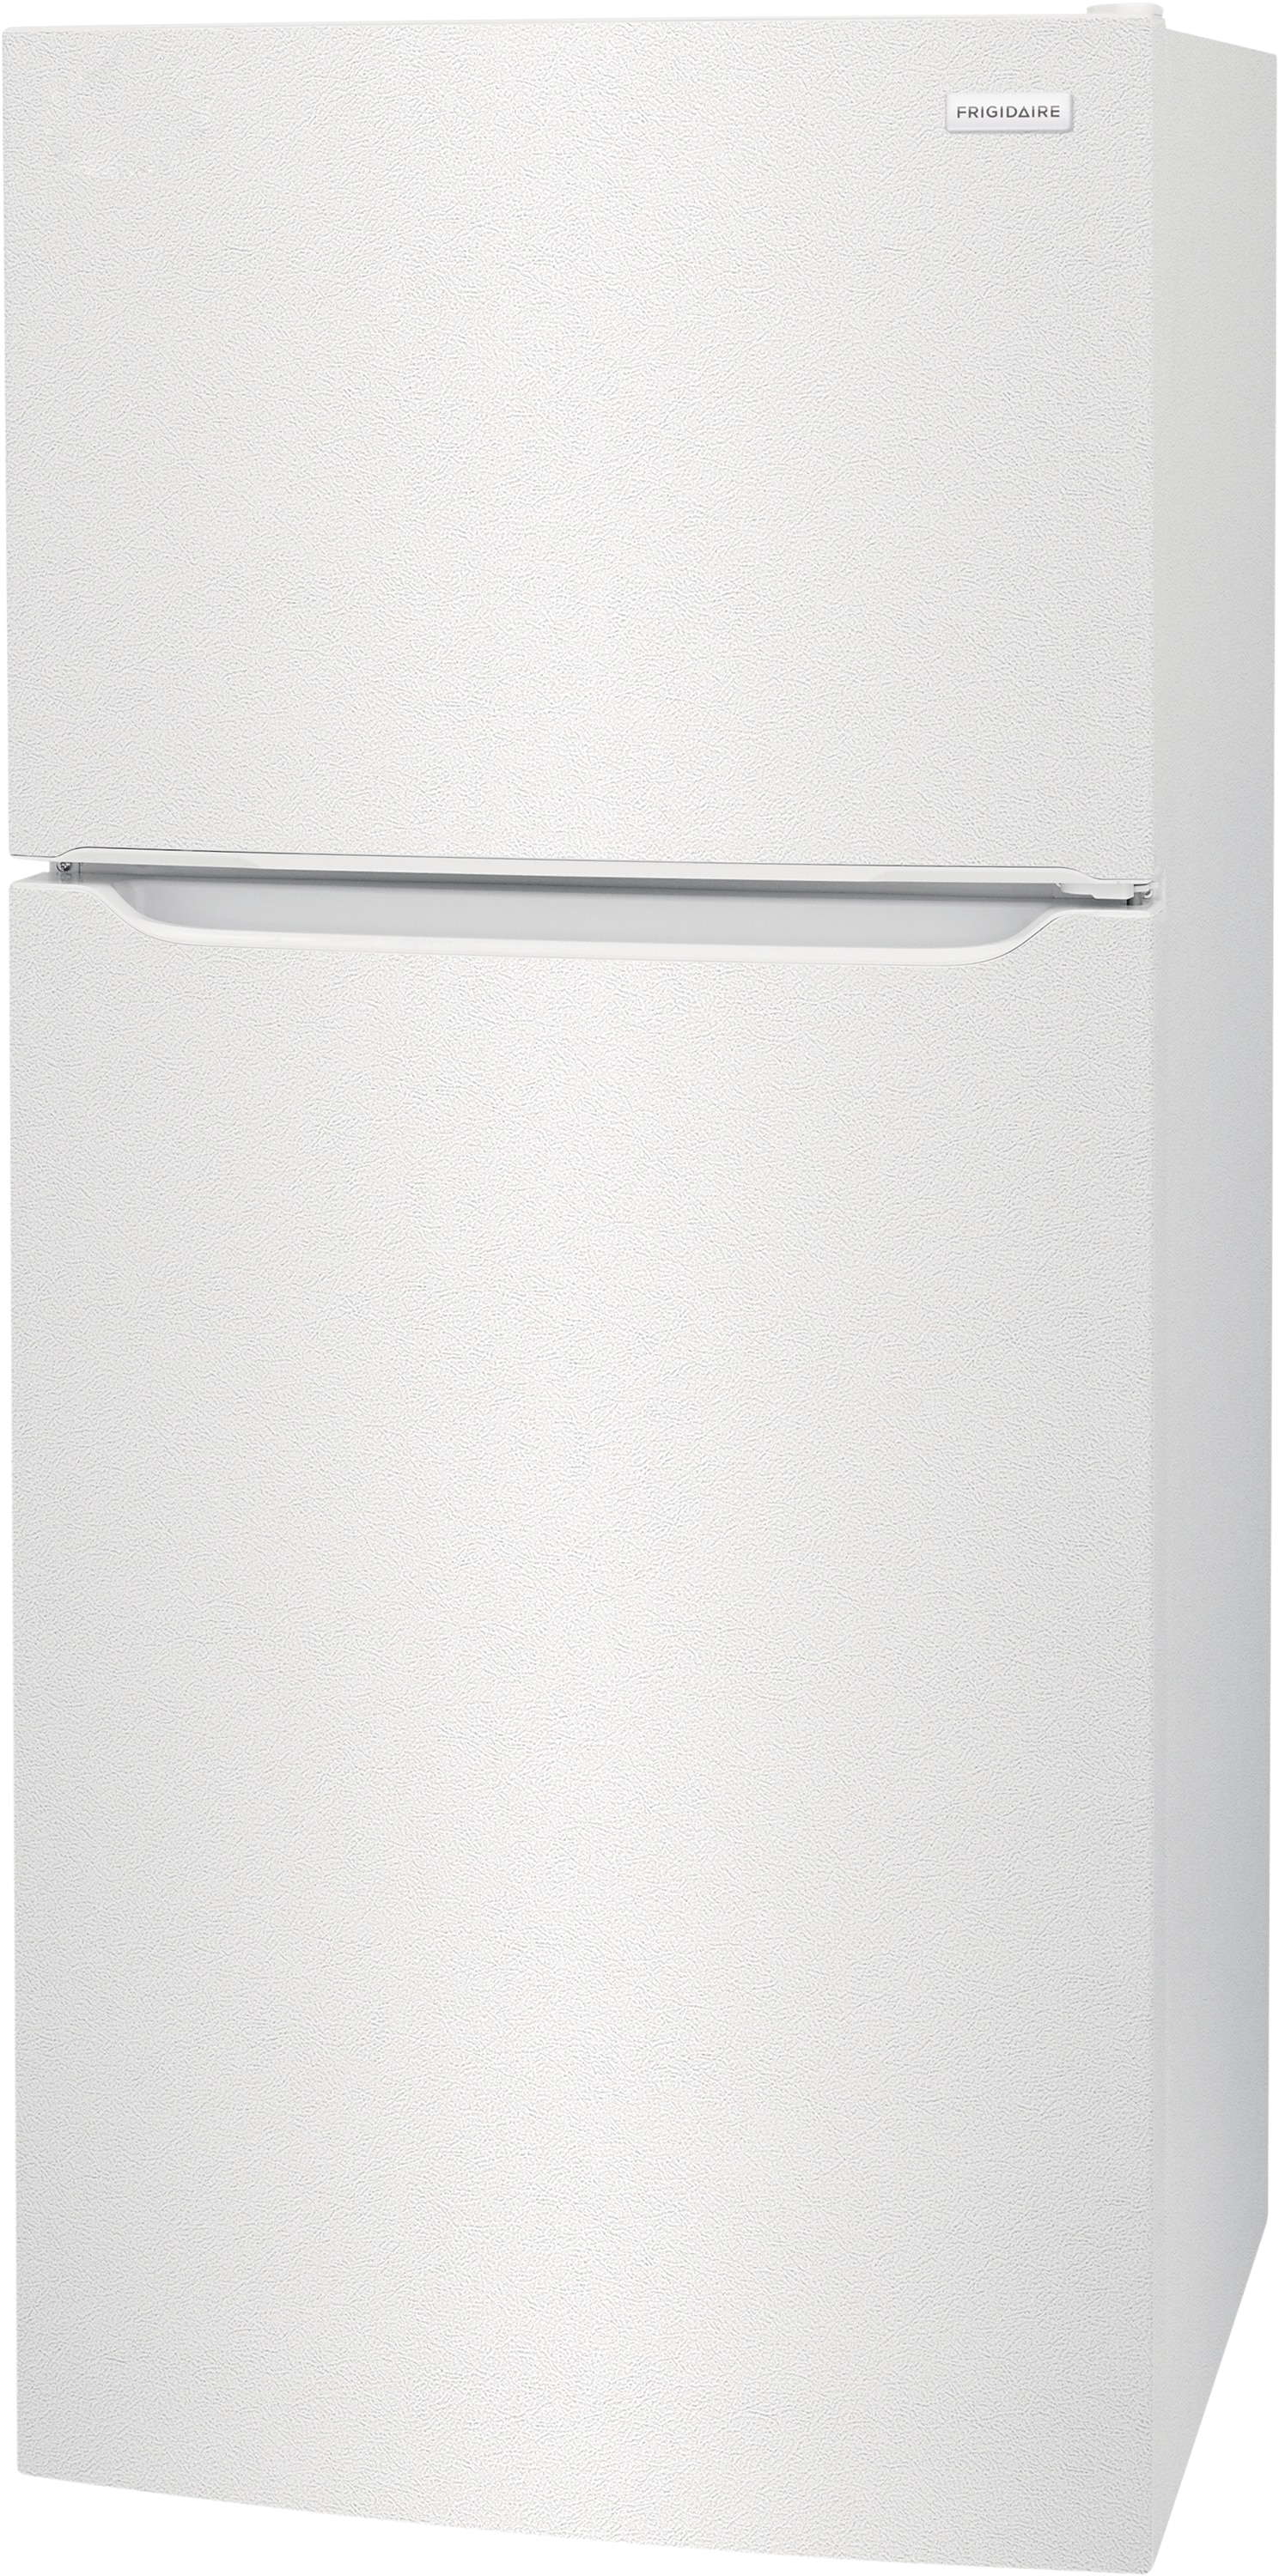 White Refrigerators